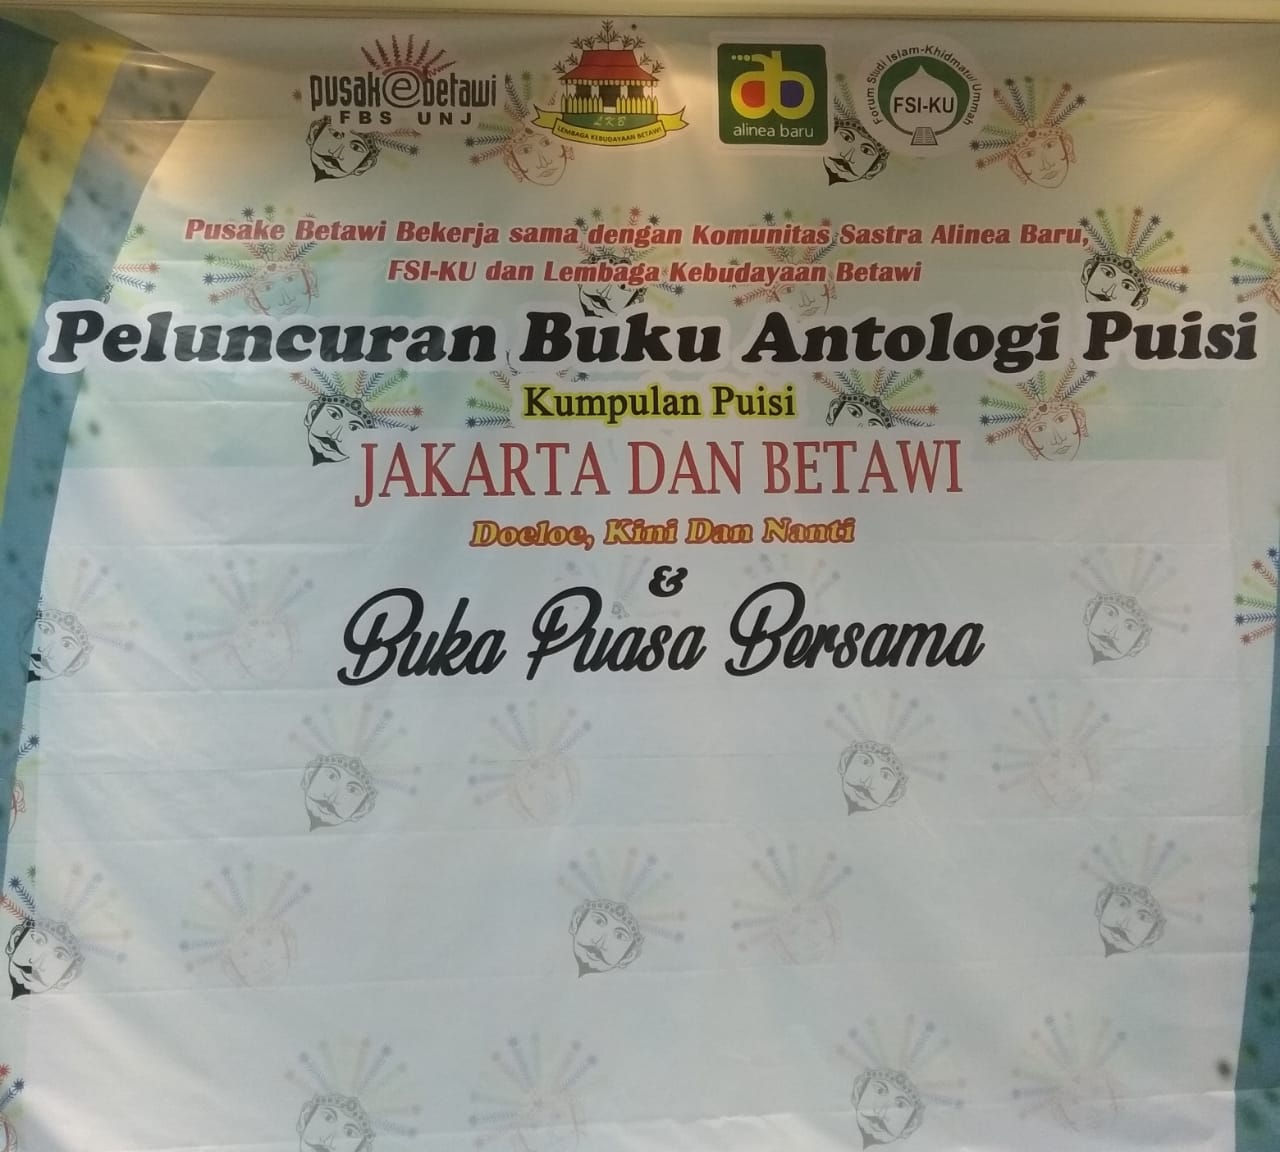 “Antologi Puisi Penyair Nusantara Jakarta dan Betawi, Doeloe, Kini, dan Nanti” Karya Dosen Prodi PBSI FBS UNJ